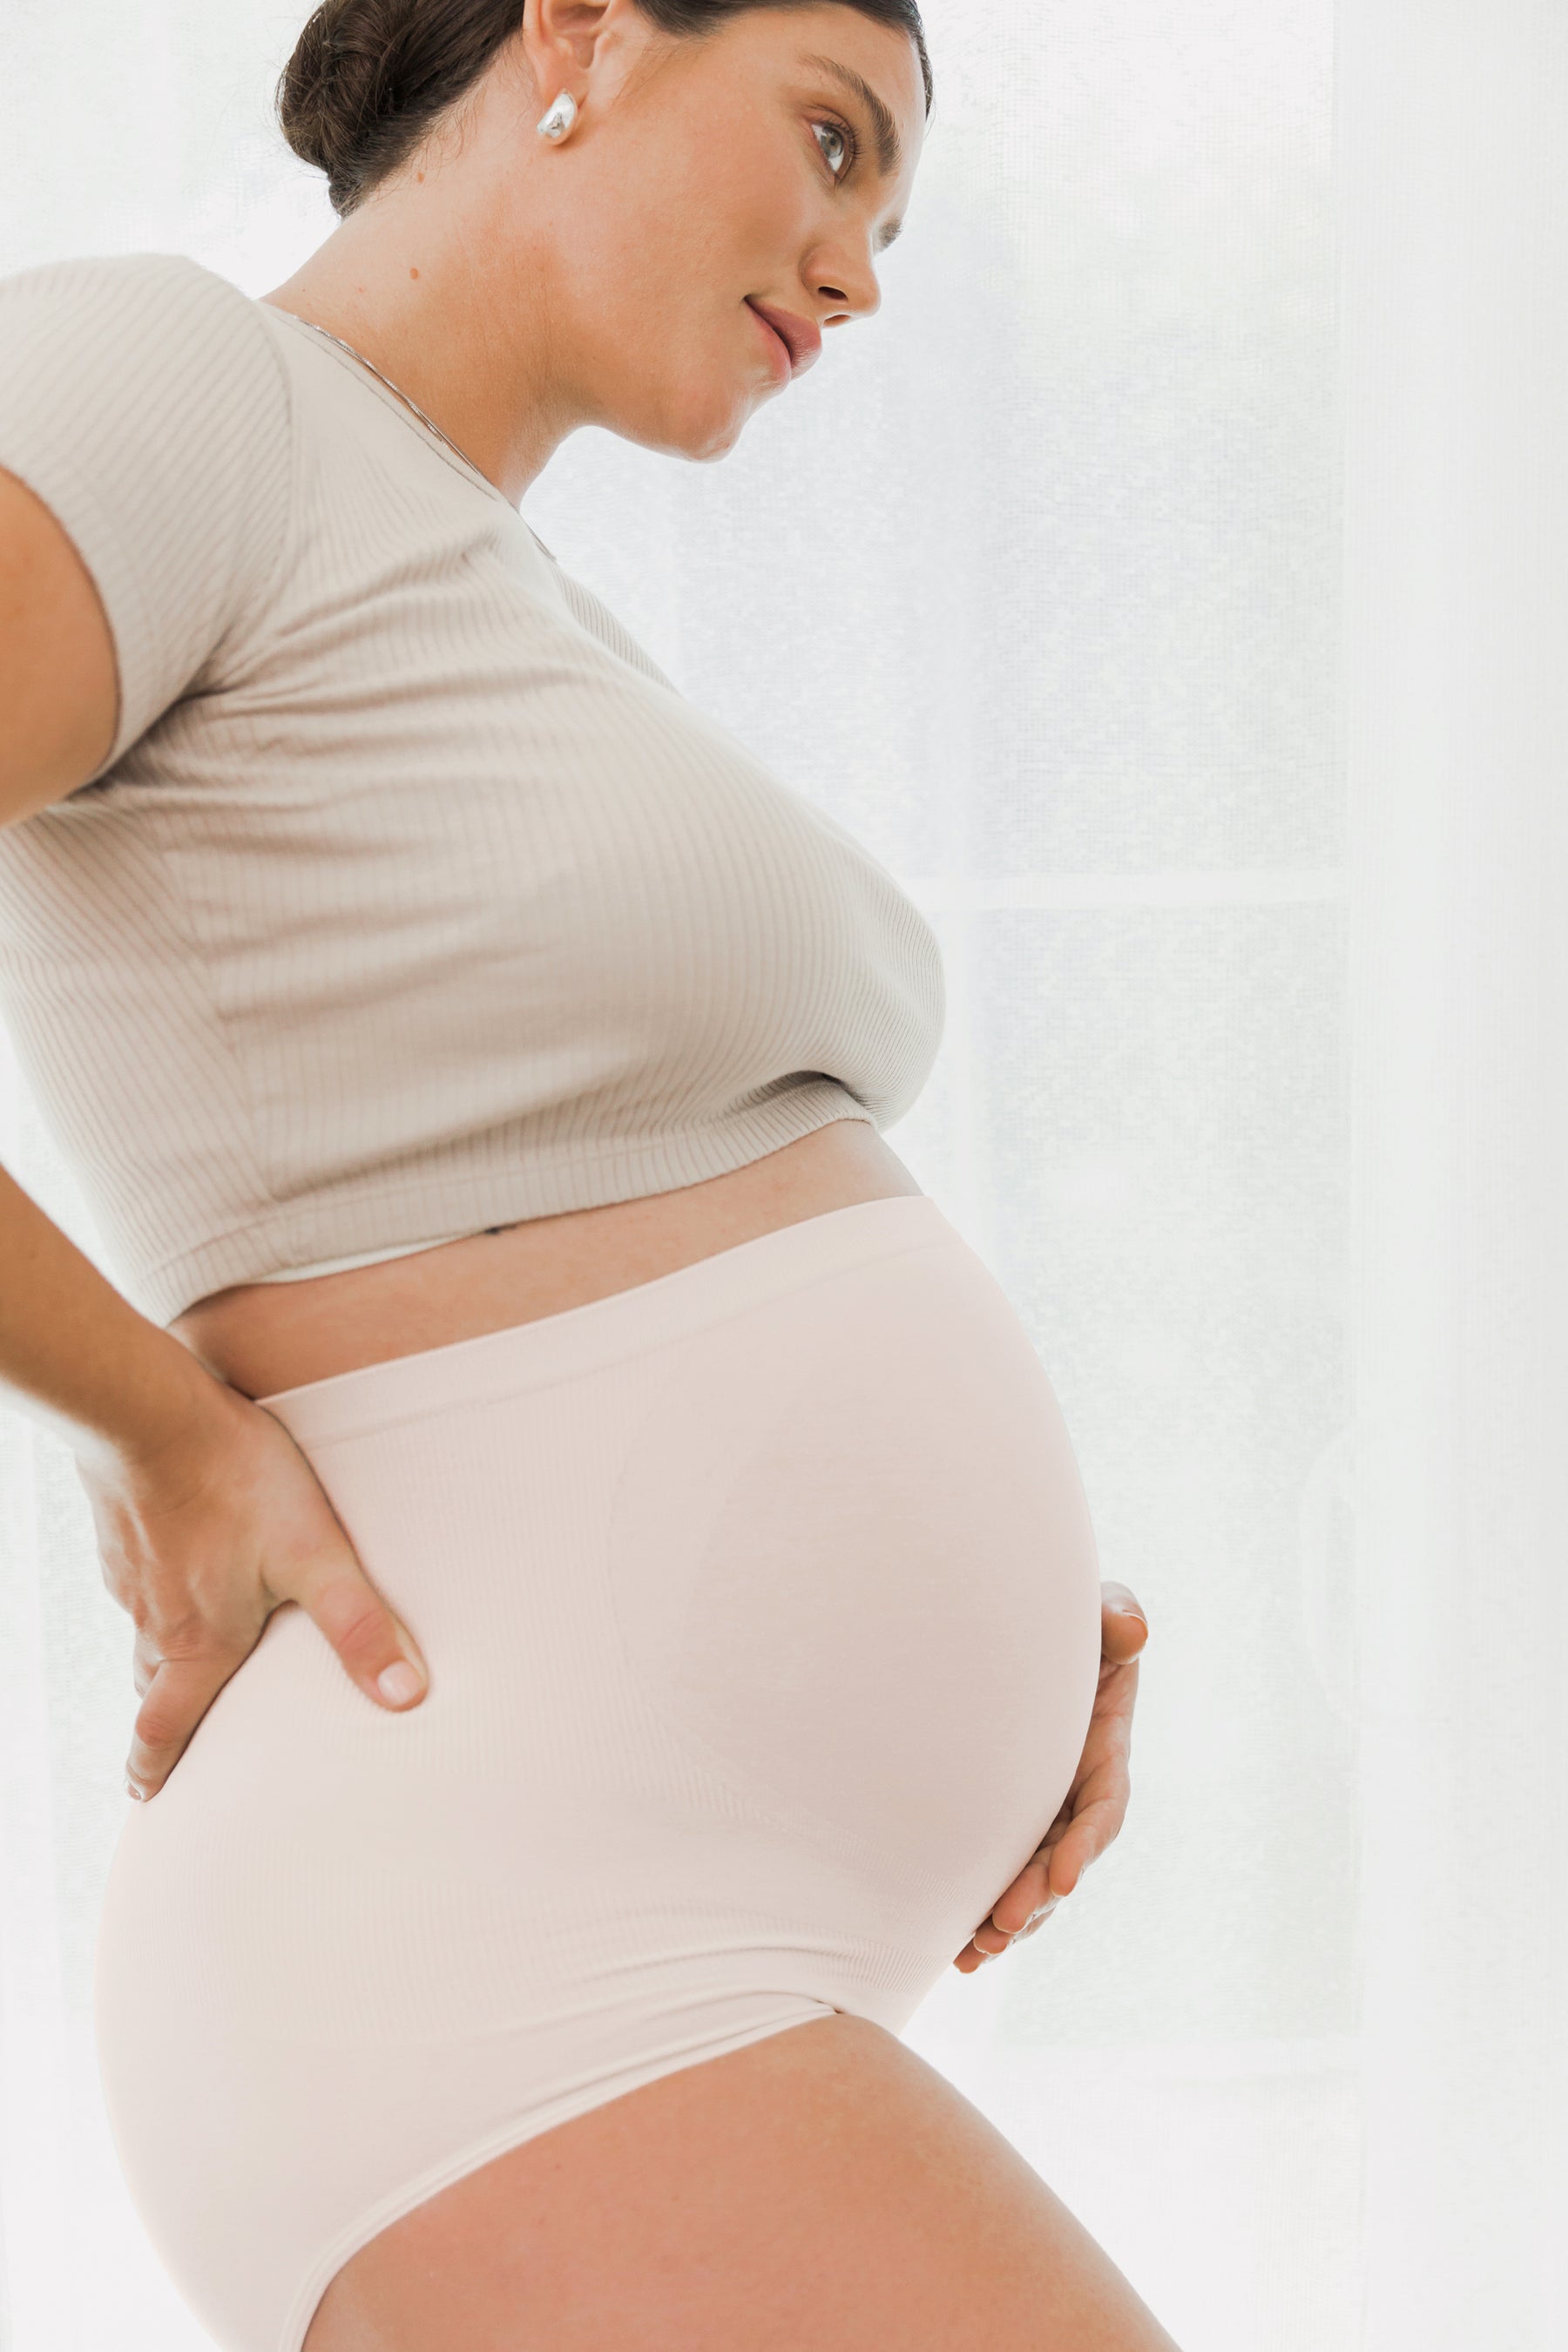 OMBMUT 6 Pack Womens Cotton Maternity Underwear, Healthy Pregnancy